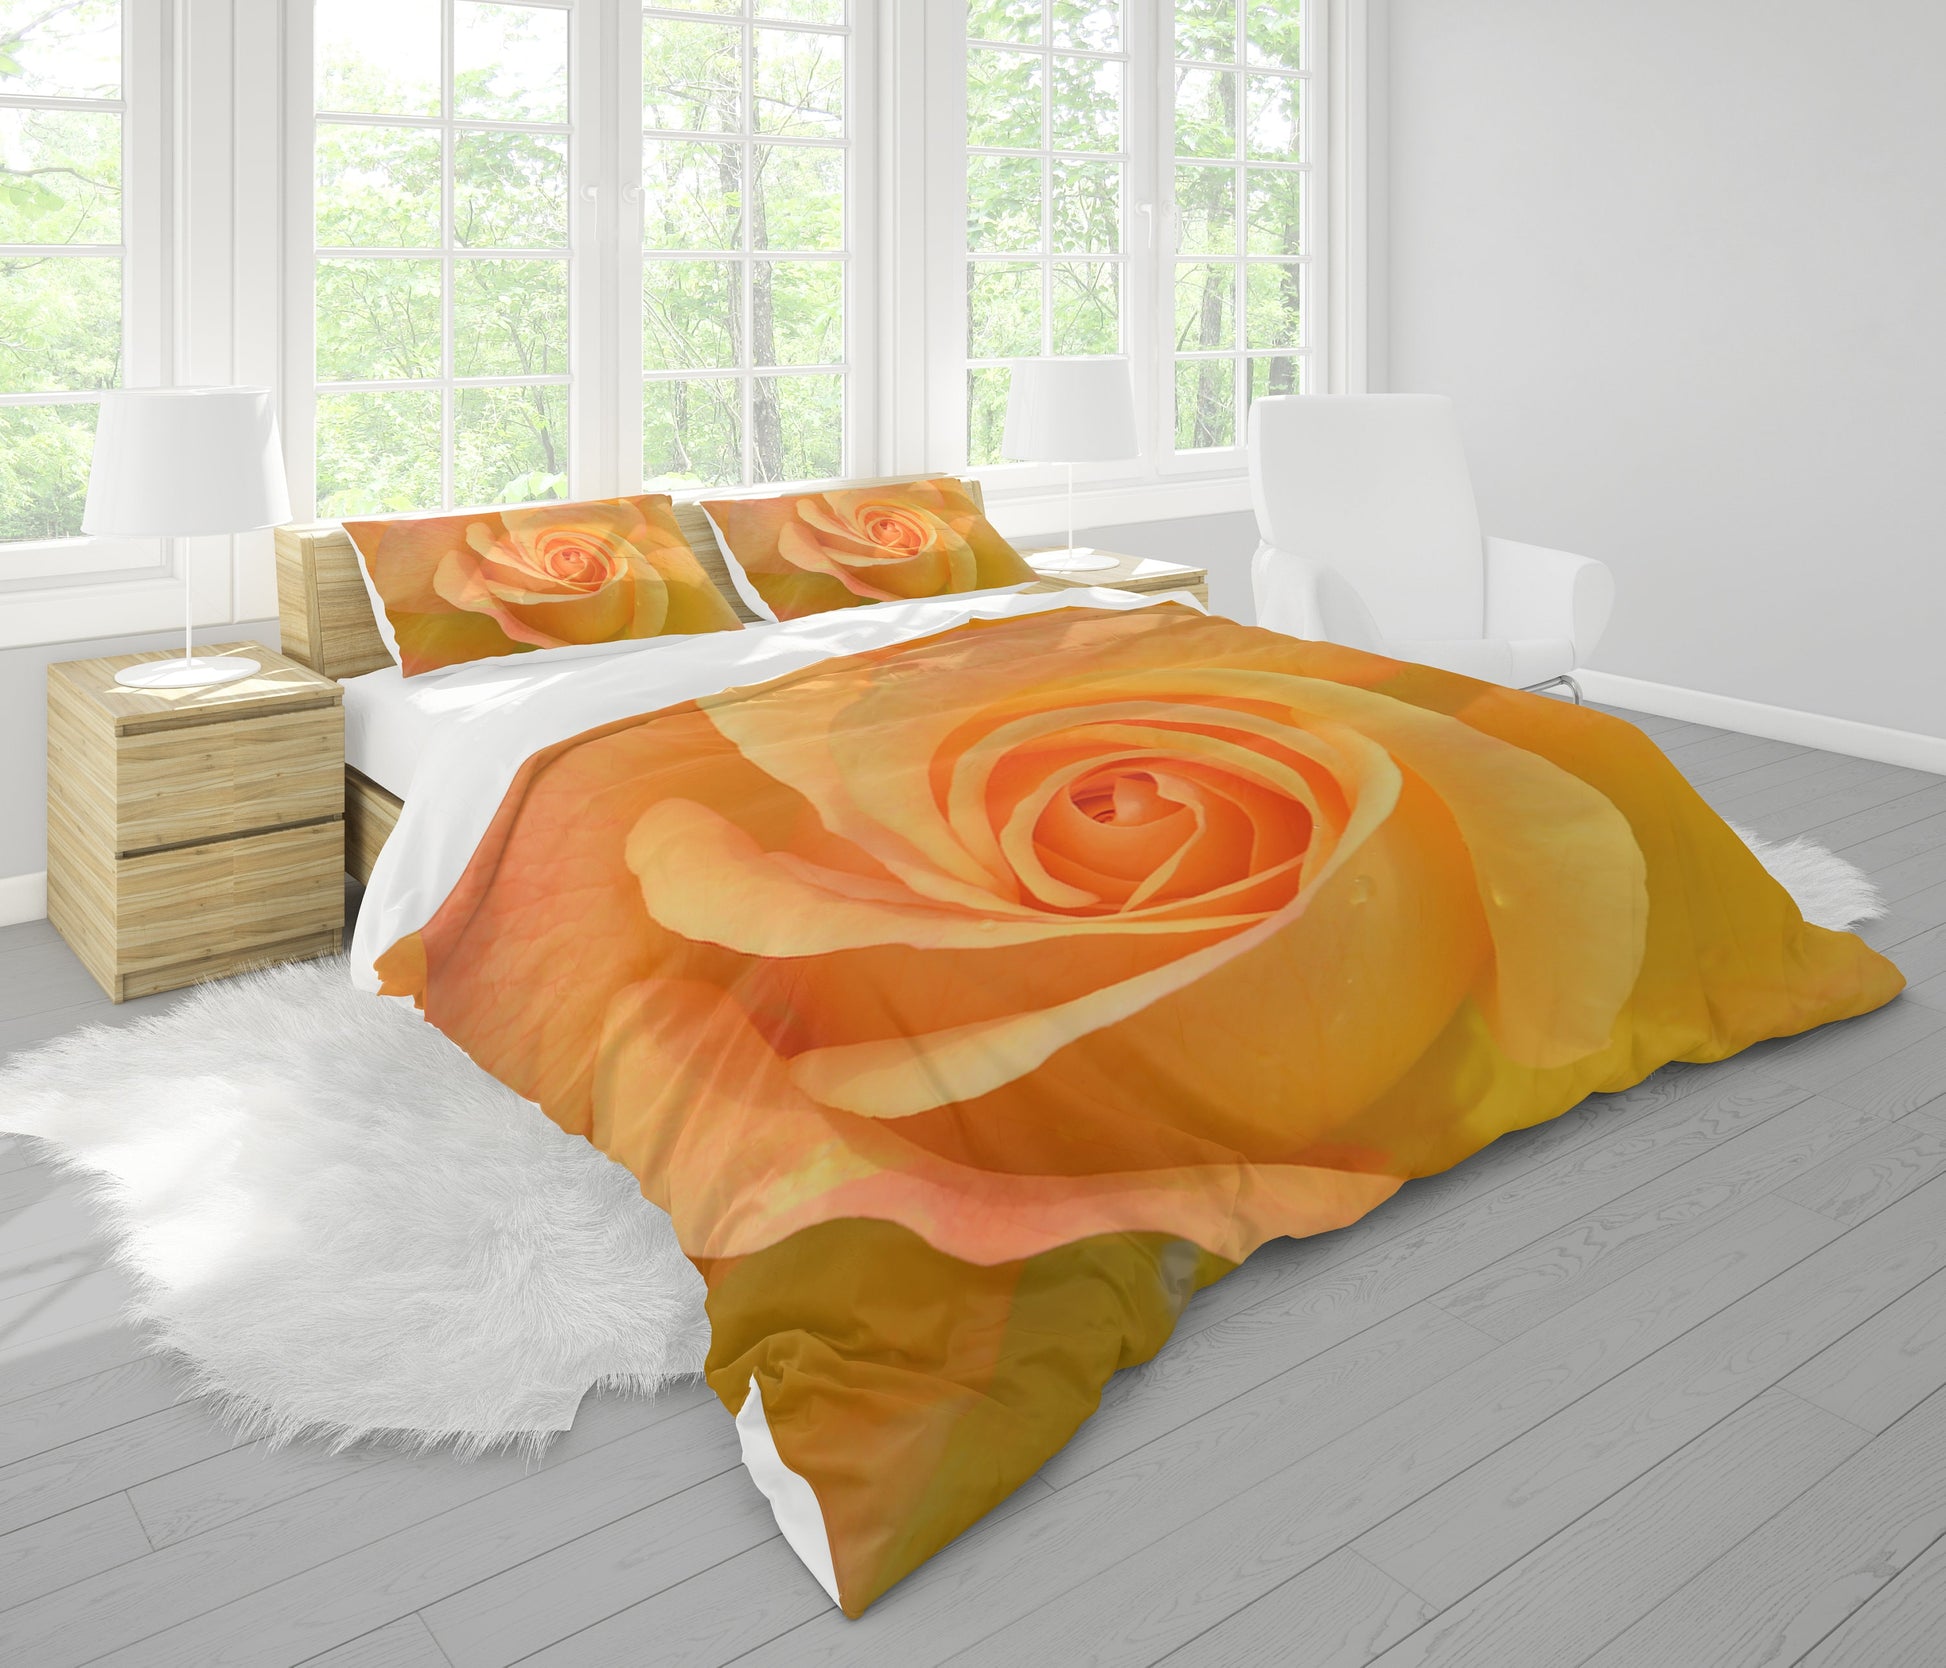 Rose Comforter or Duvet Cover Yellow orange roses bedding Nature bedding floral comforter botanical bedding romantic bedding